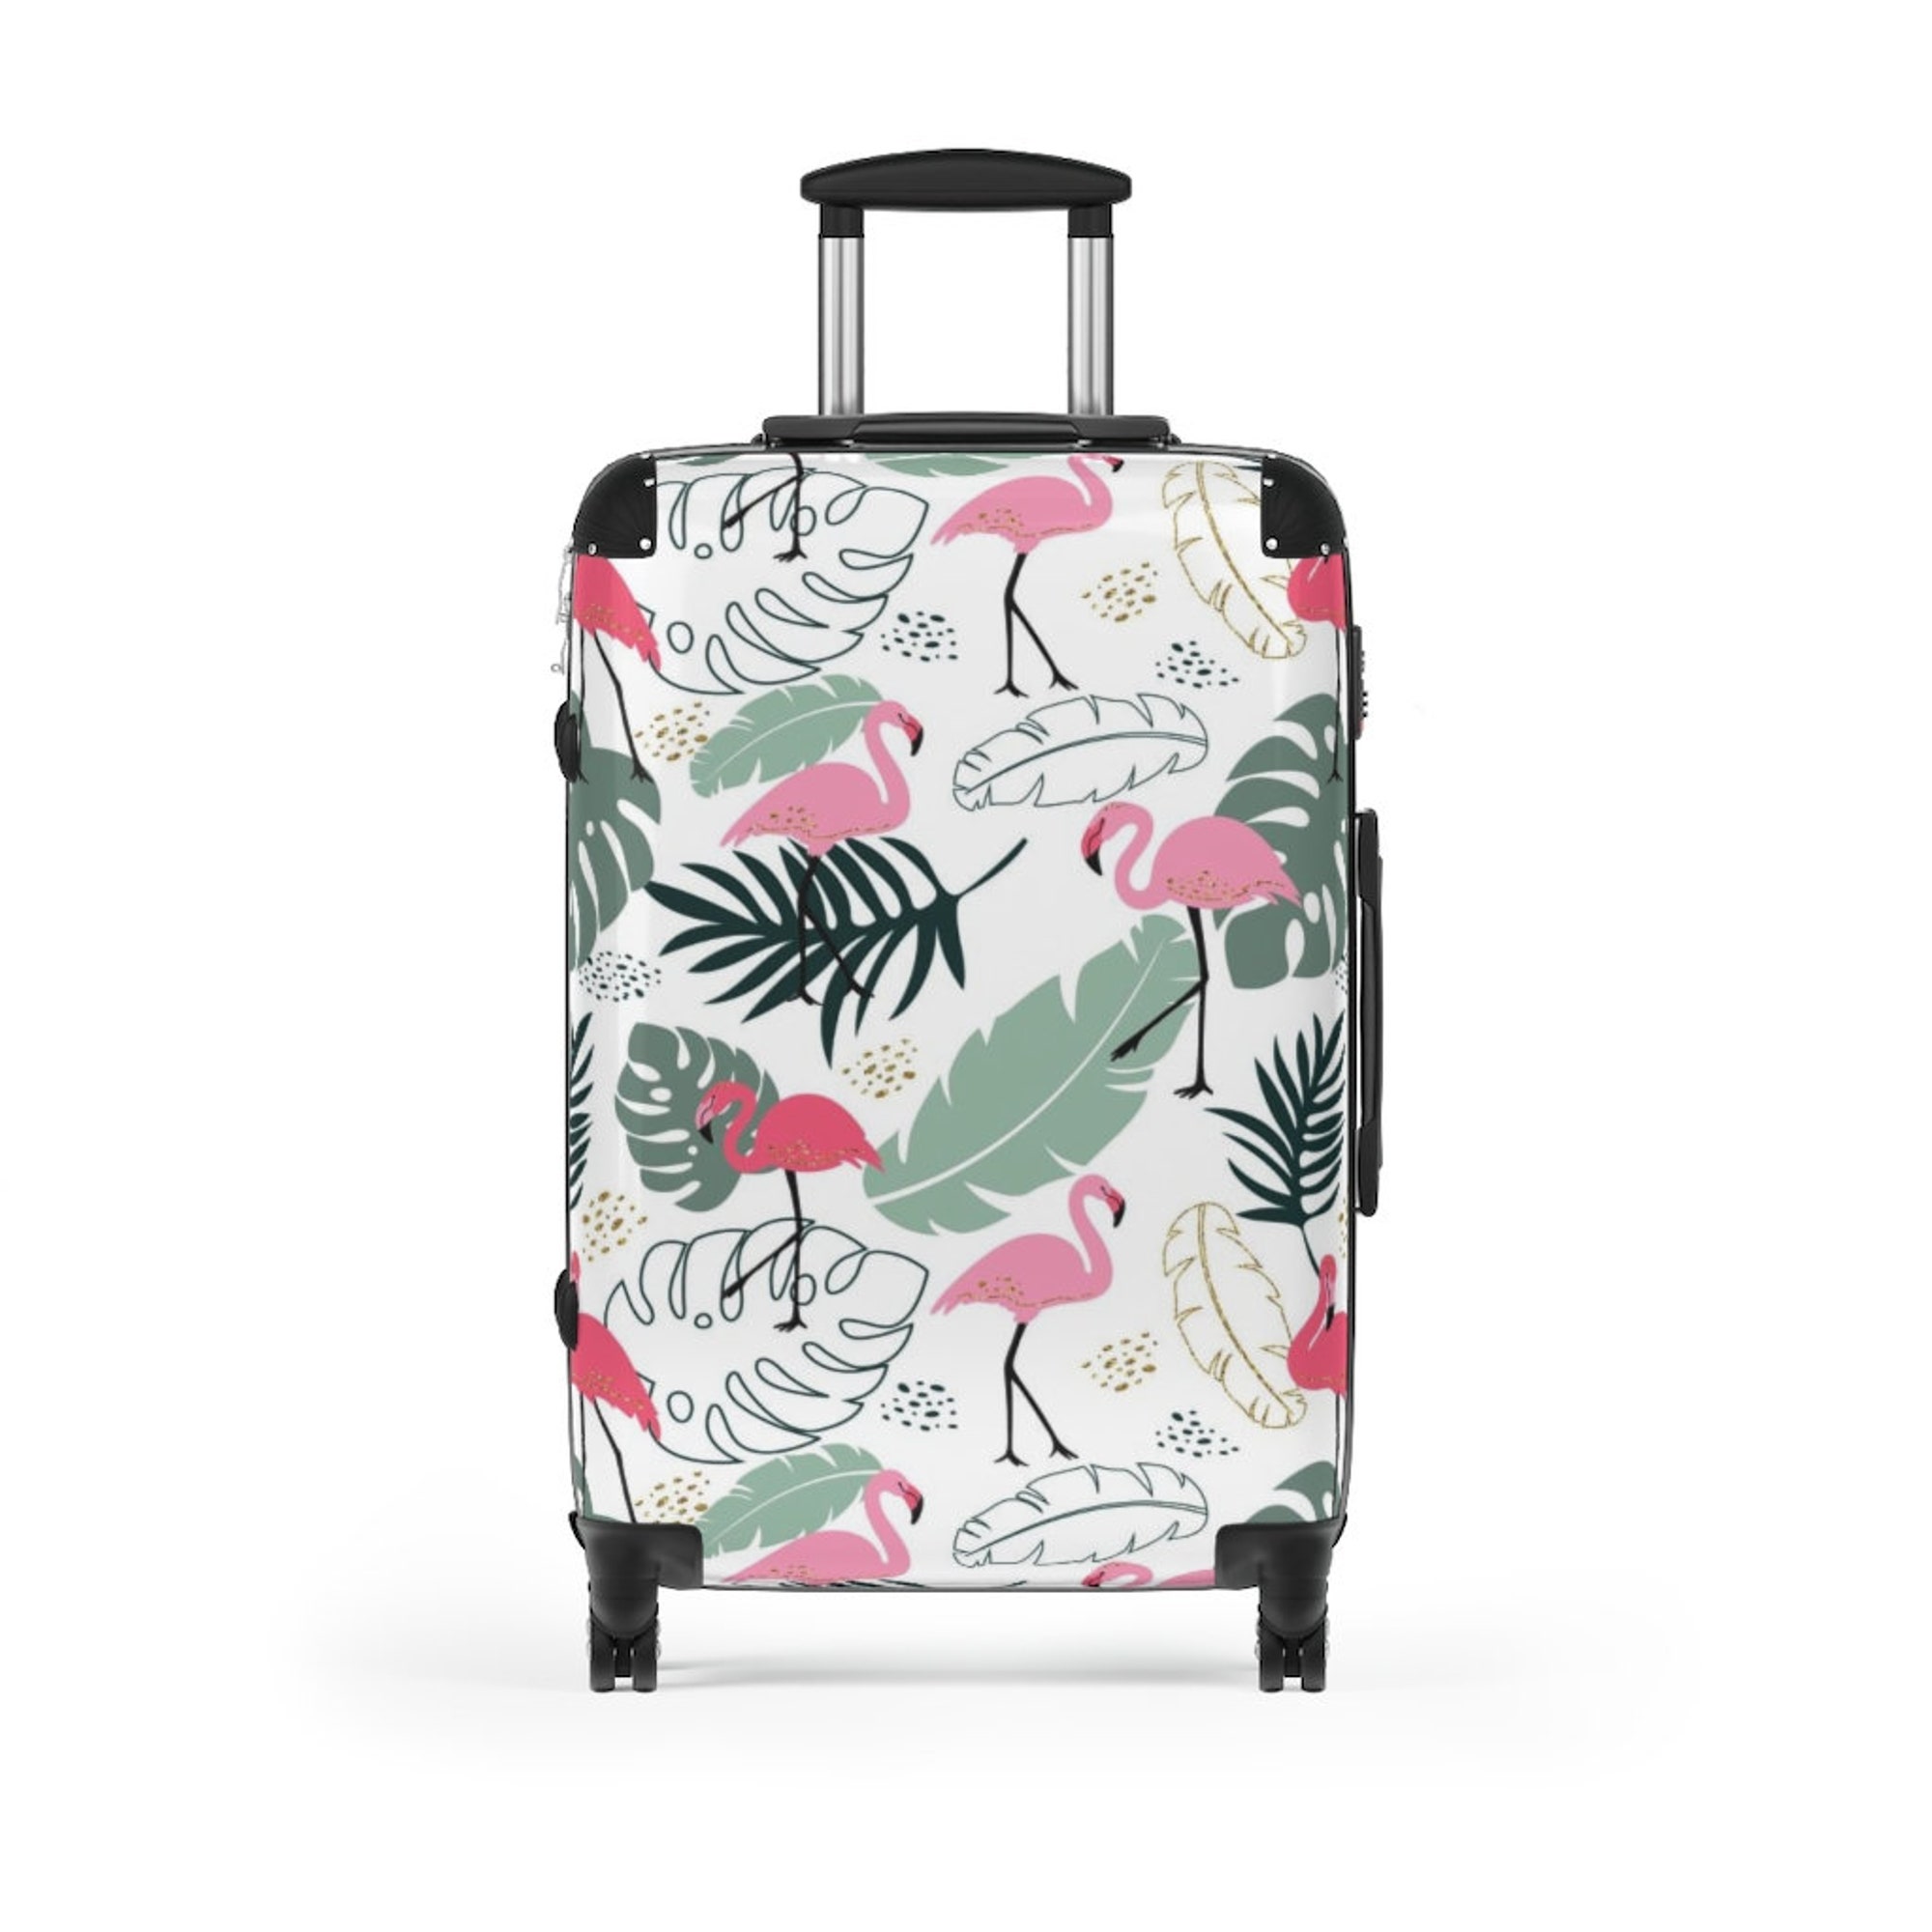 The Tropical Flamingo Suitcase